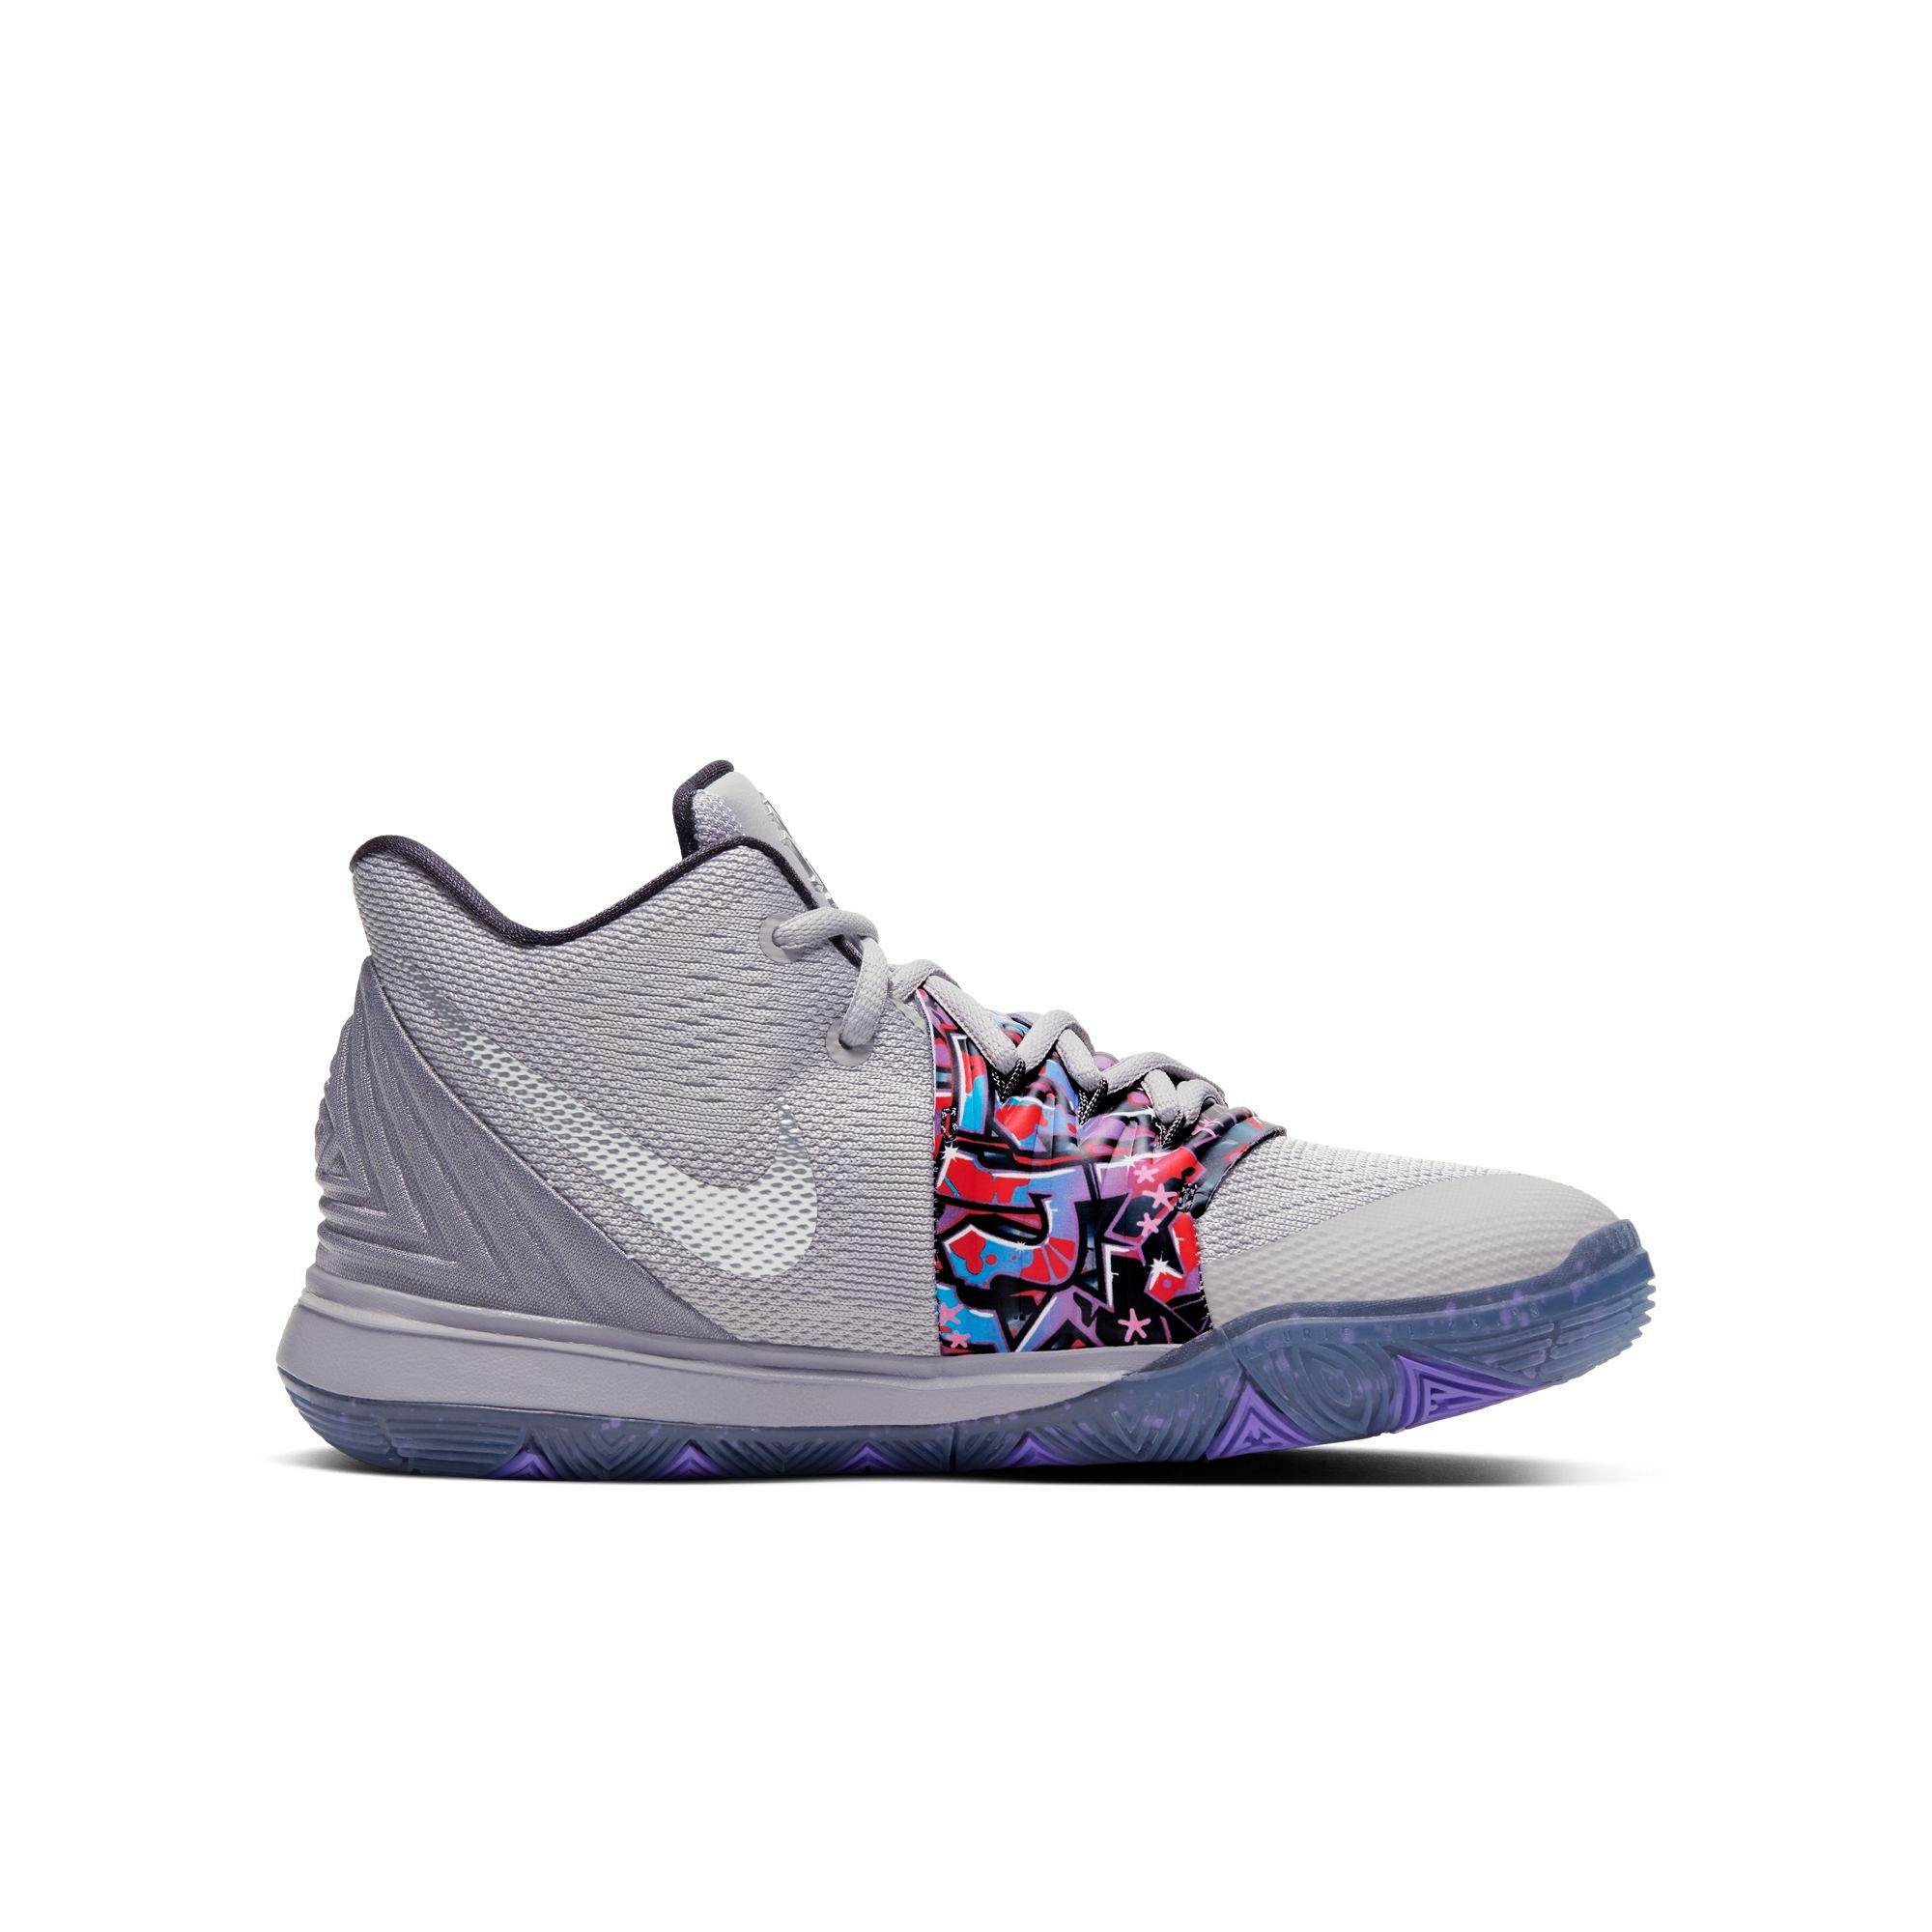 Nike Kyrie 5 Oreo Sneaker Detailed Look Review nba